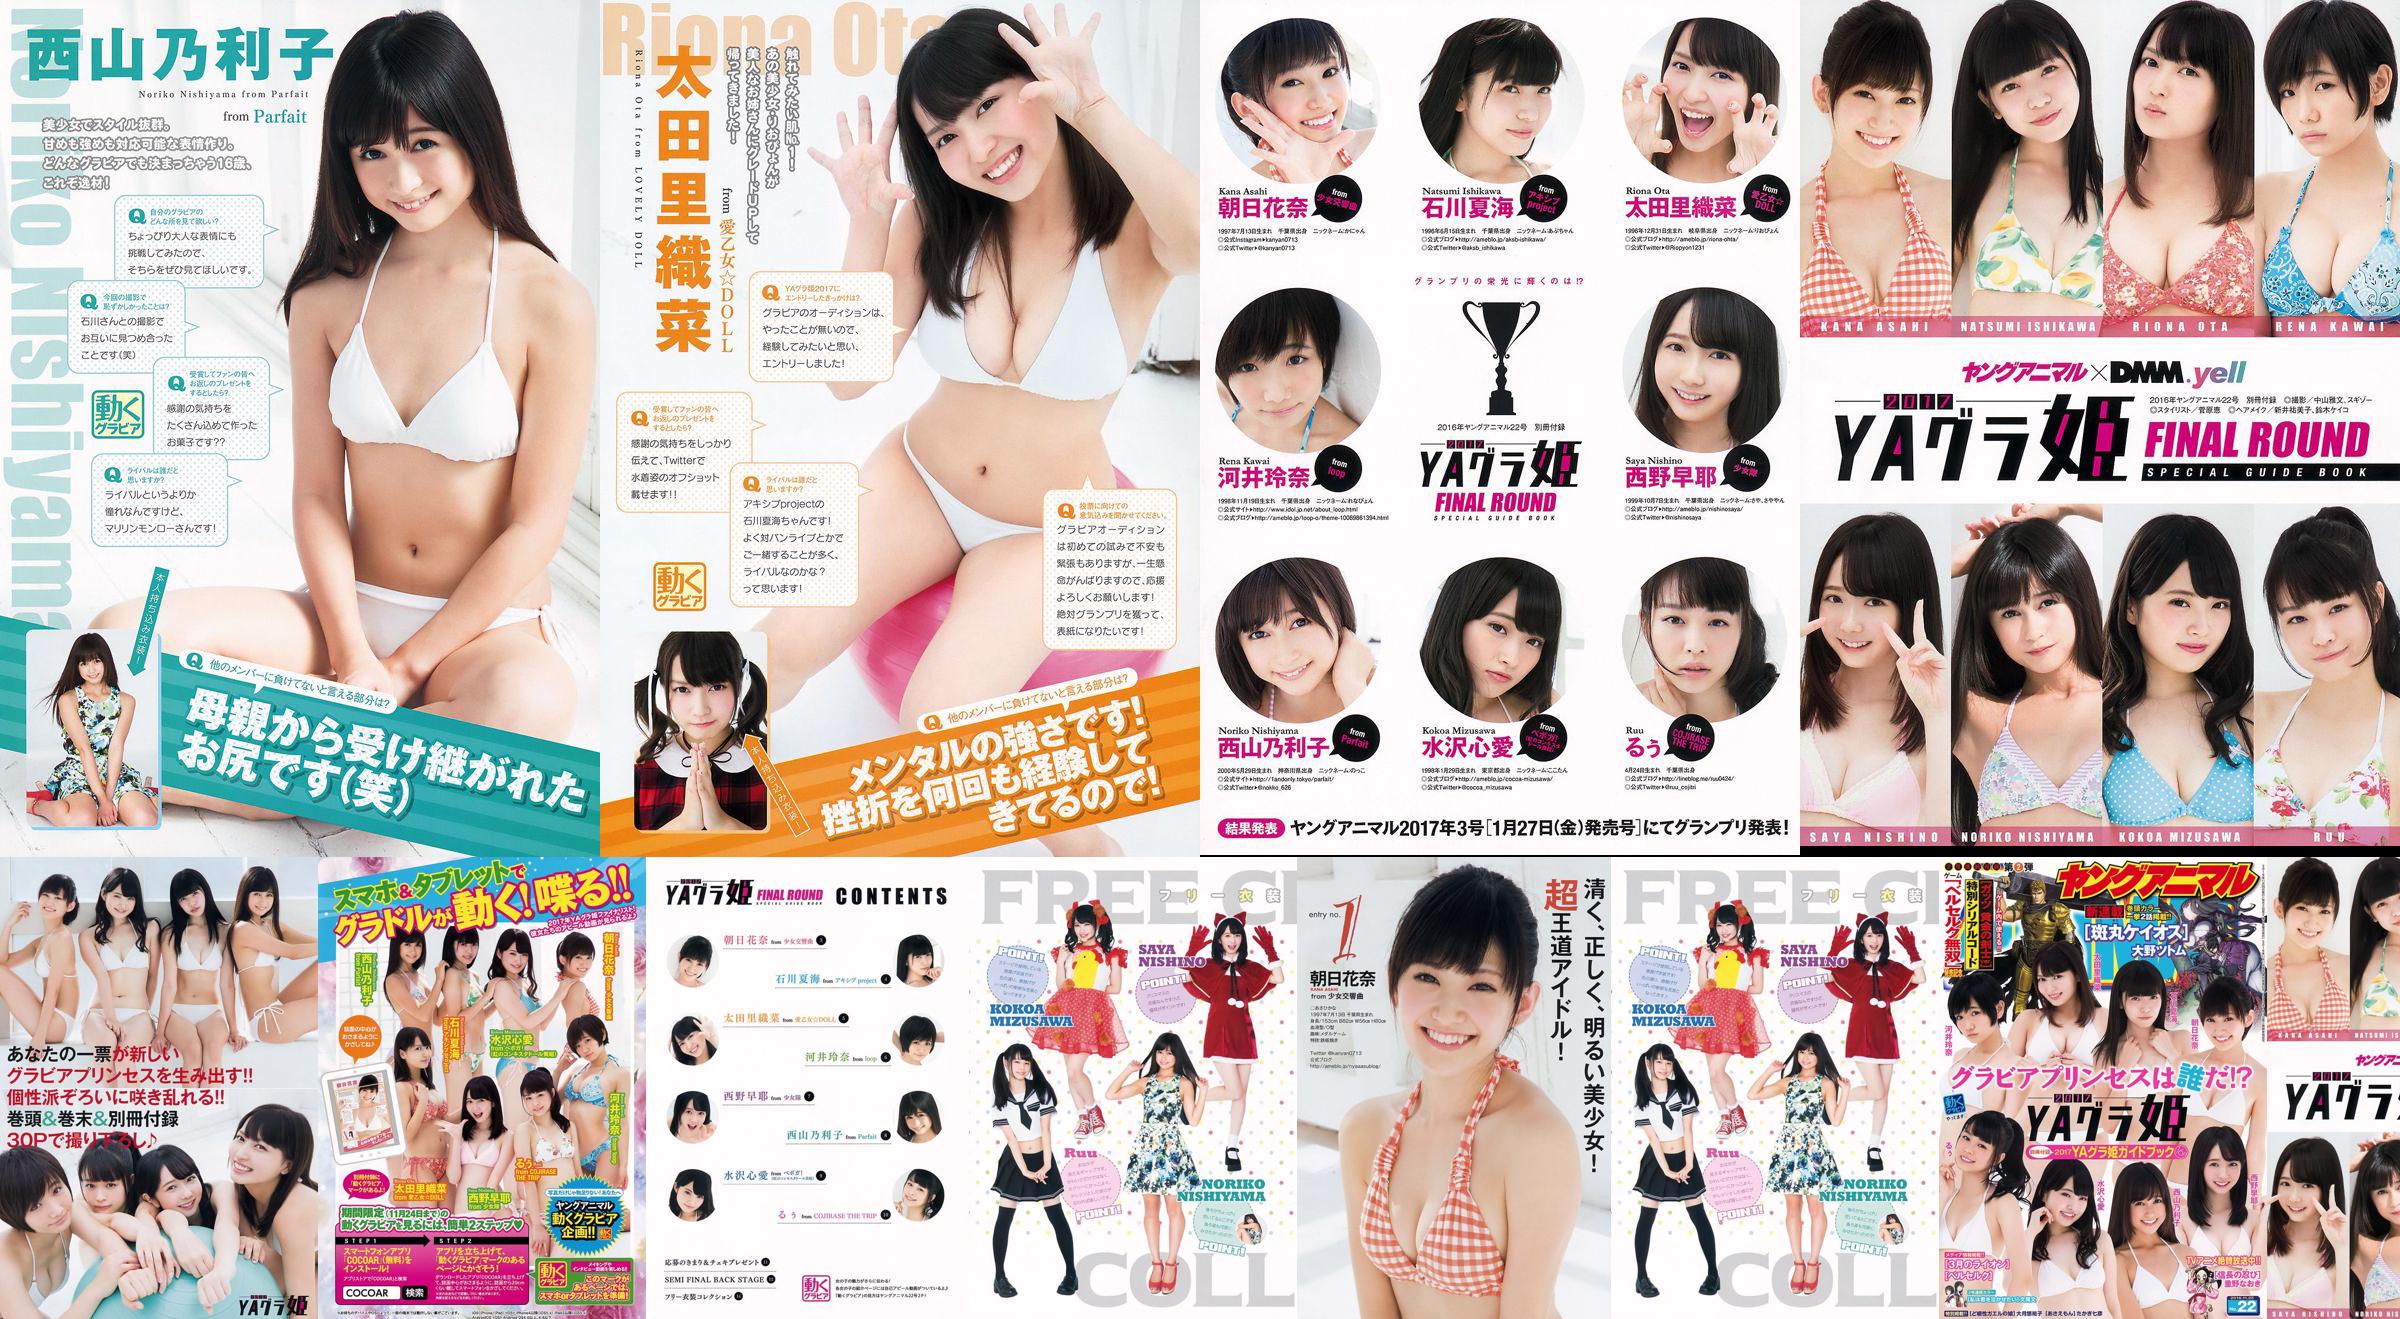 Mizusawa Beloved, Nishiyama Noriko, Nishino Haya, Kawai Reina, Ota Rina, Ishikawa Natsumi, Asahi Hana [น้องสัตว์] นิตยสารภาพถ่ายฉบับที่ 22 ประจำปี 2559 No.79bc41 หน้า 1